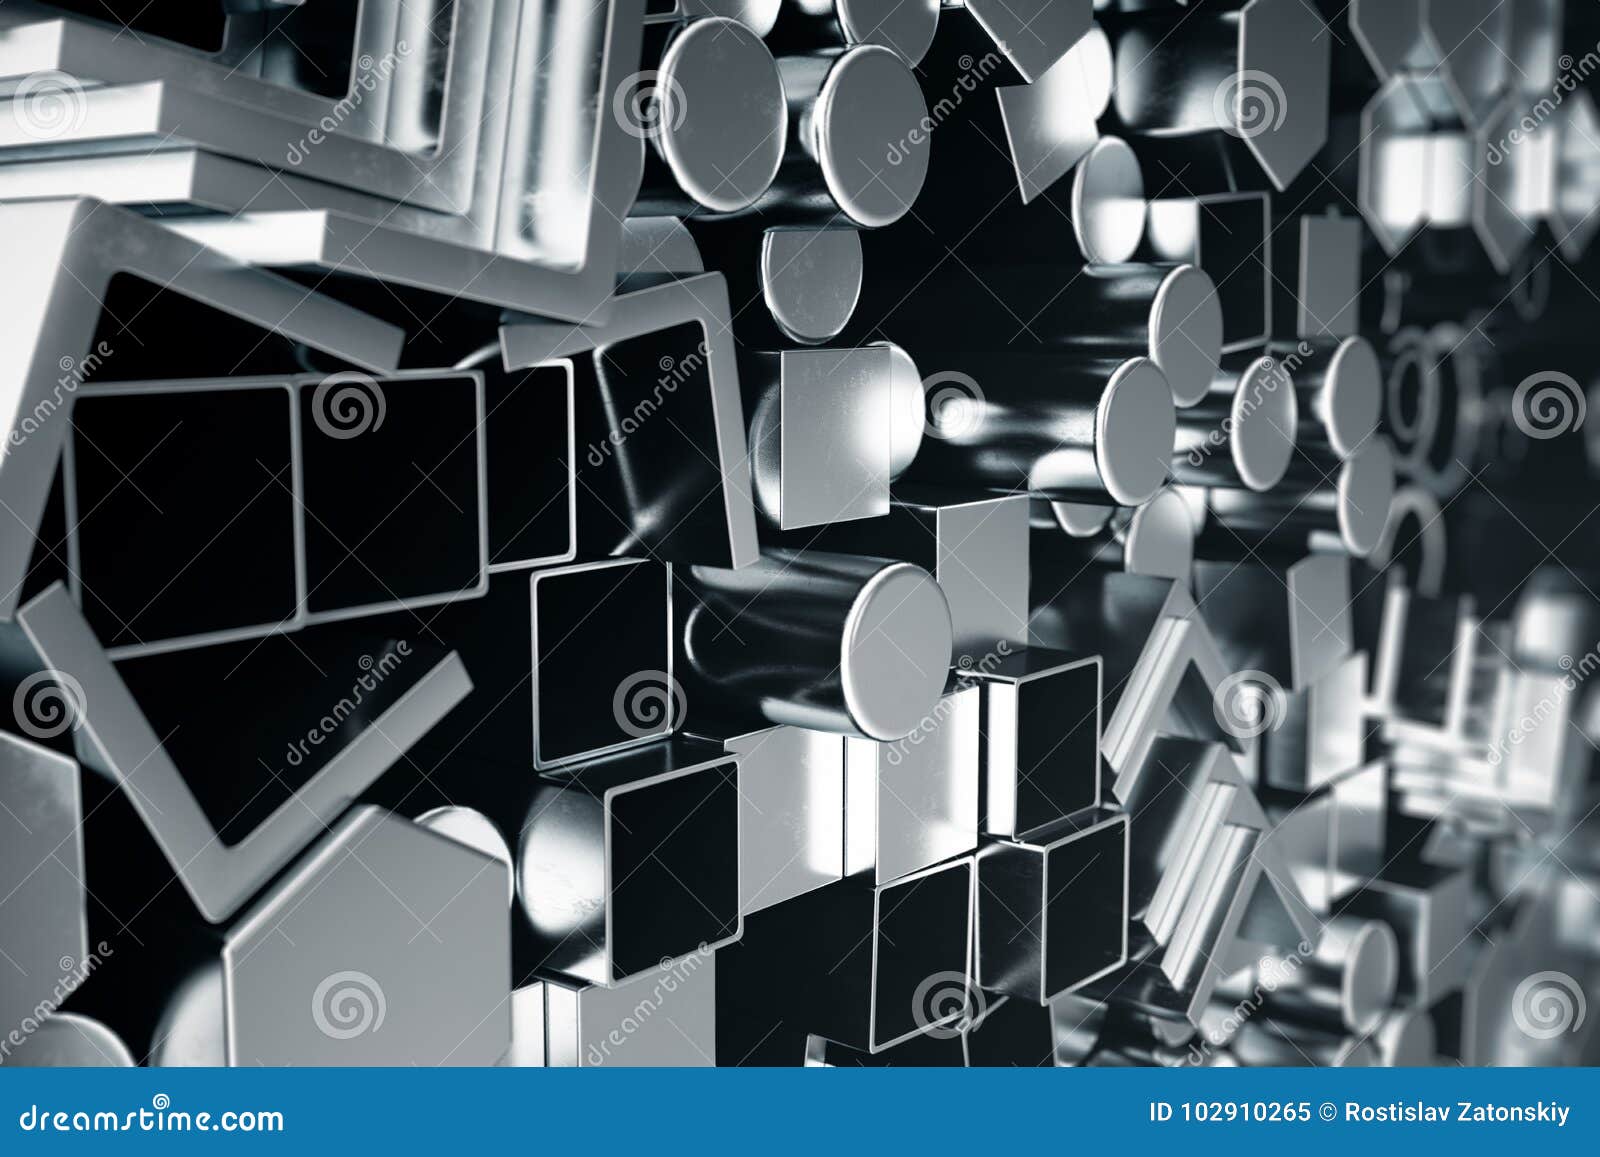 cylindrical metal steel profiles, hexagonal metal steel profiles, square metal steel profiles. different stainless steel